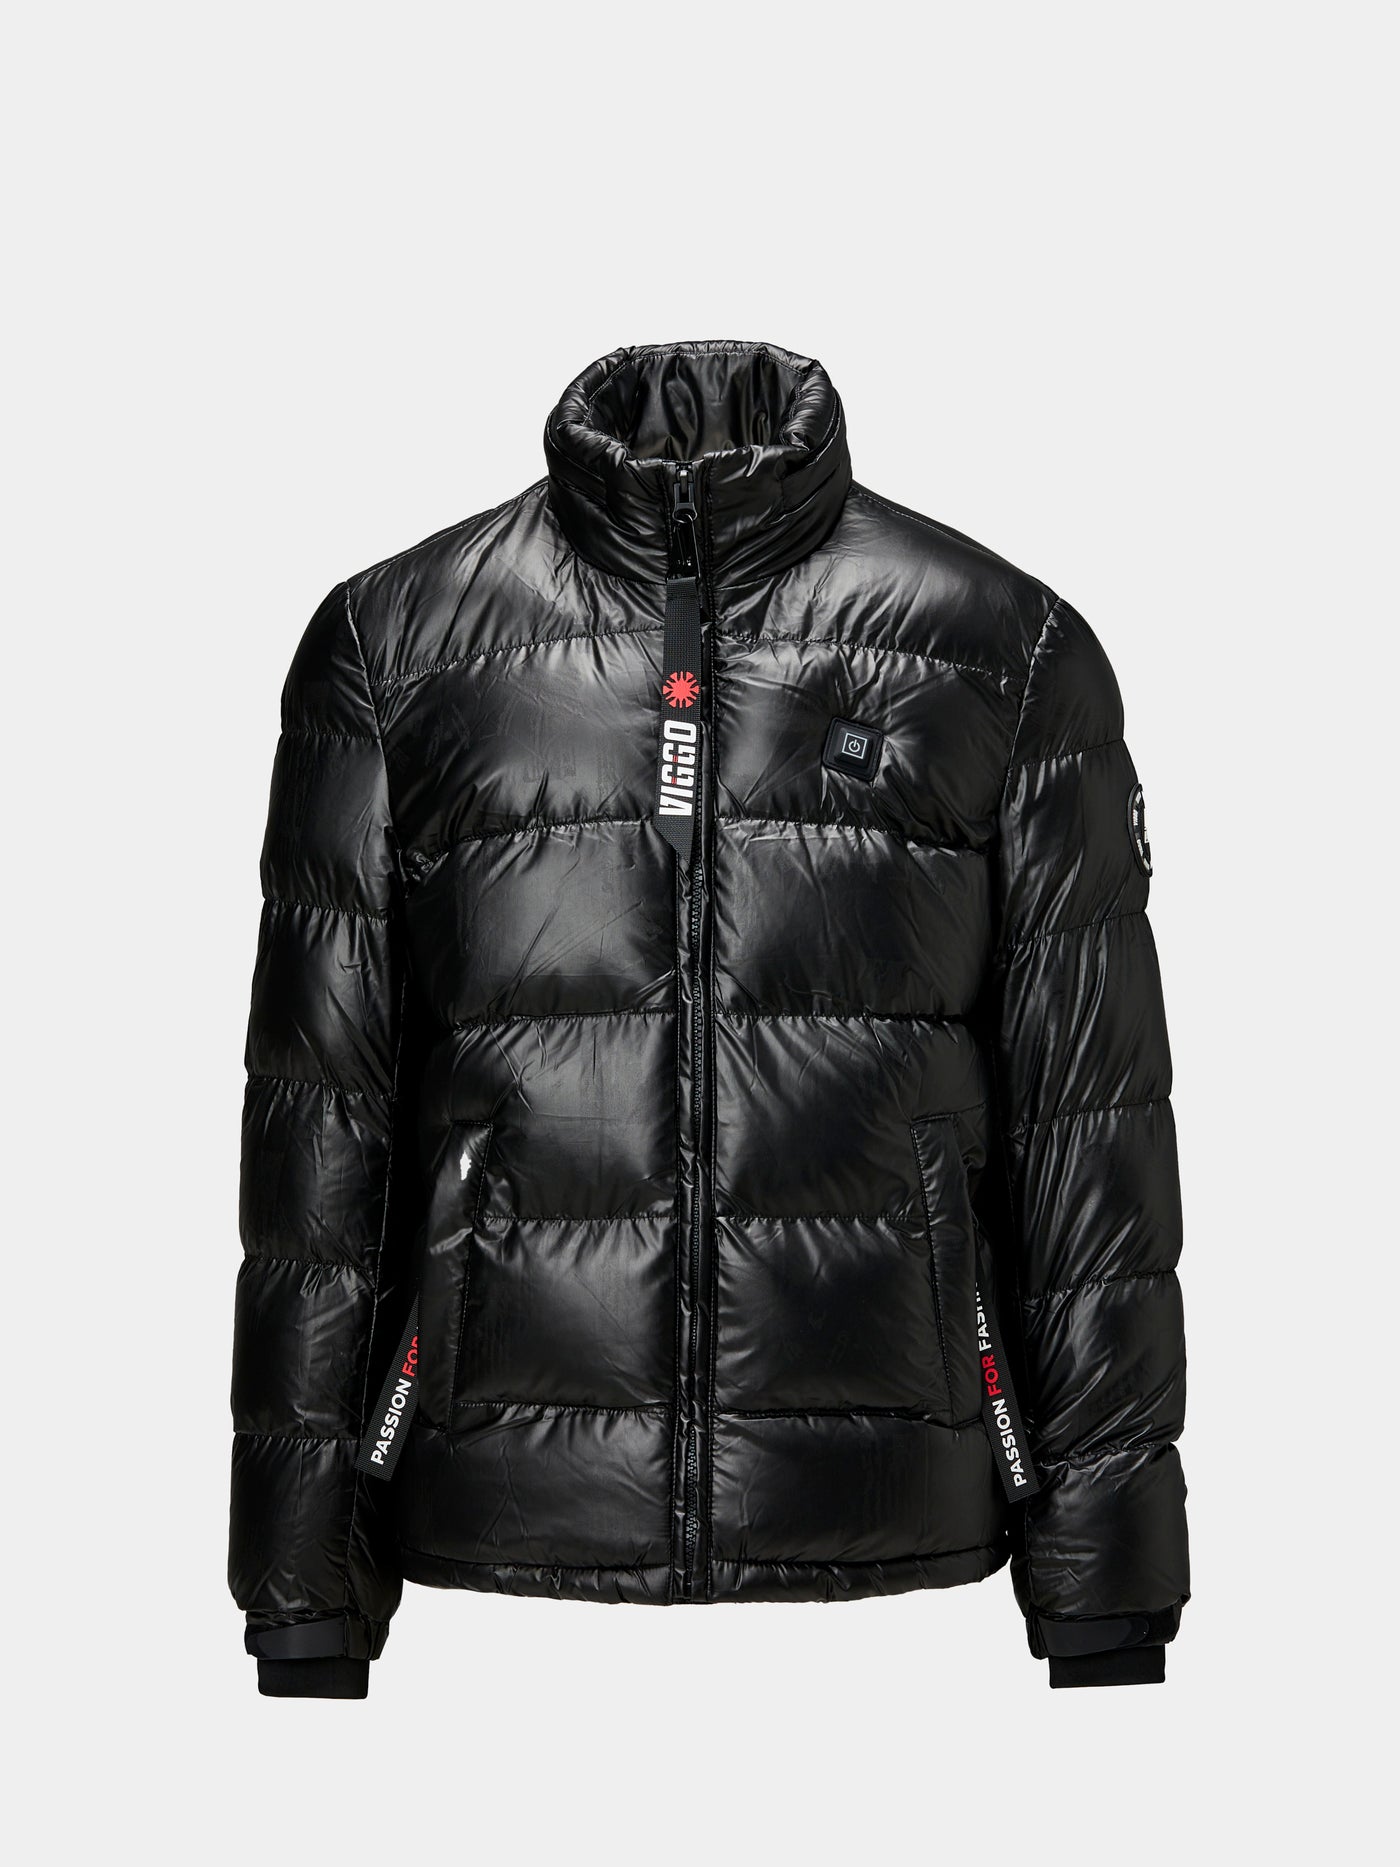 Black jacket with heating